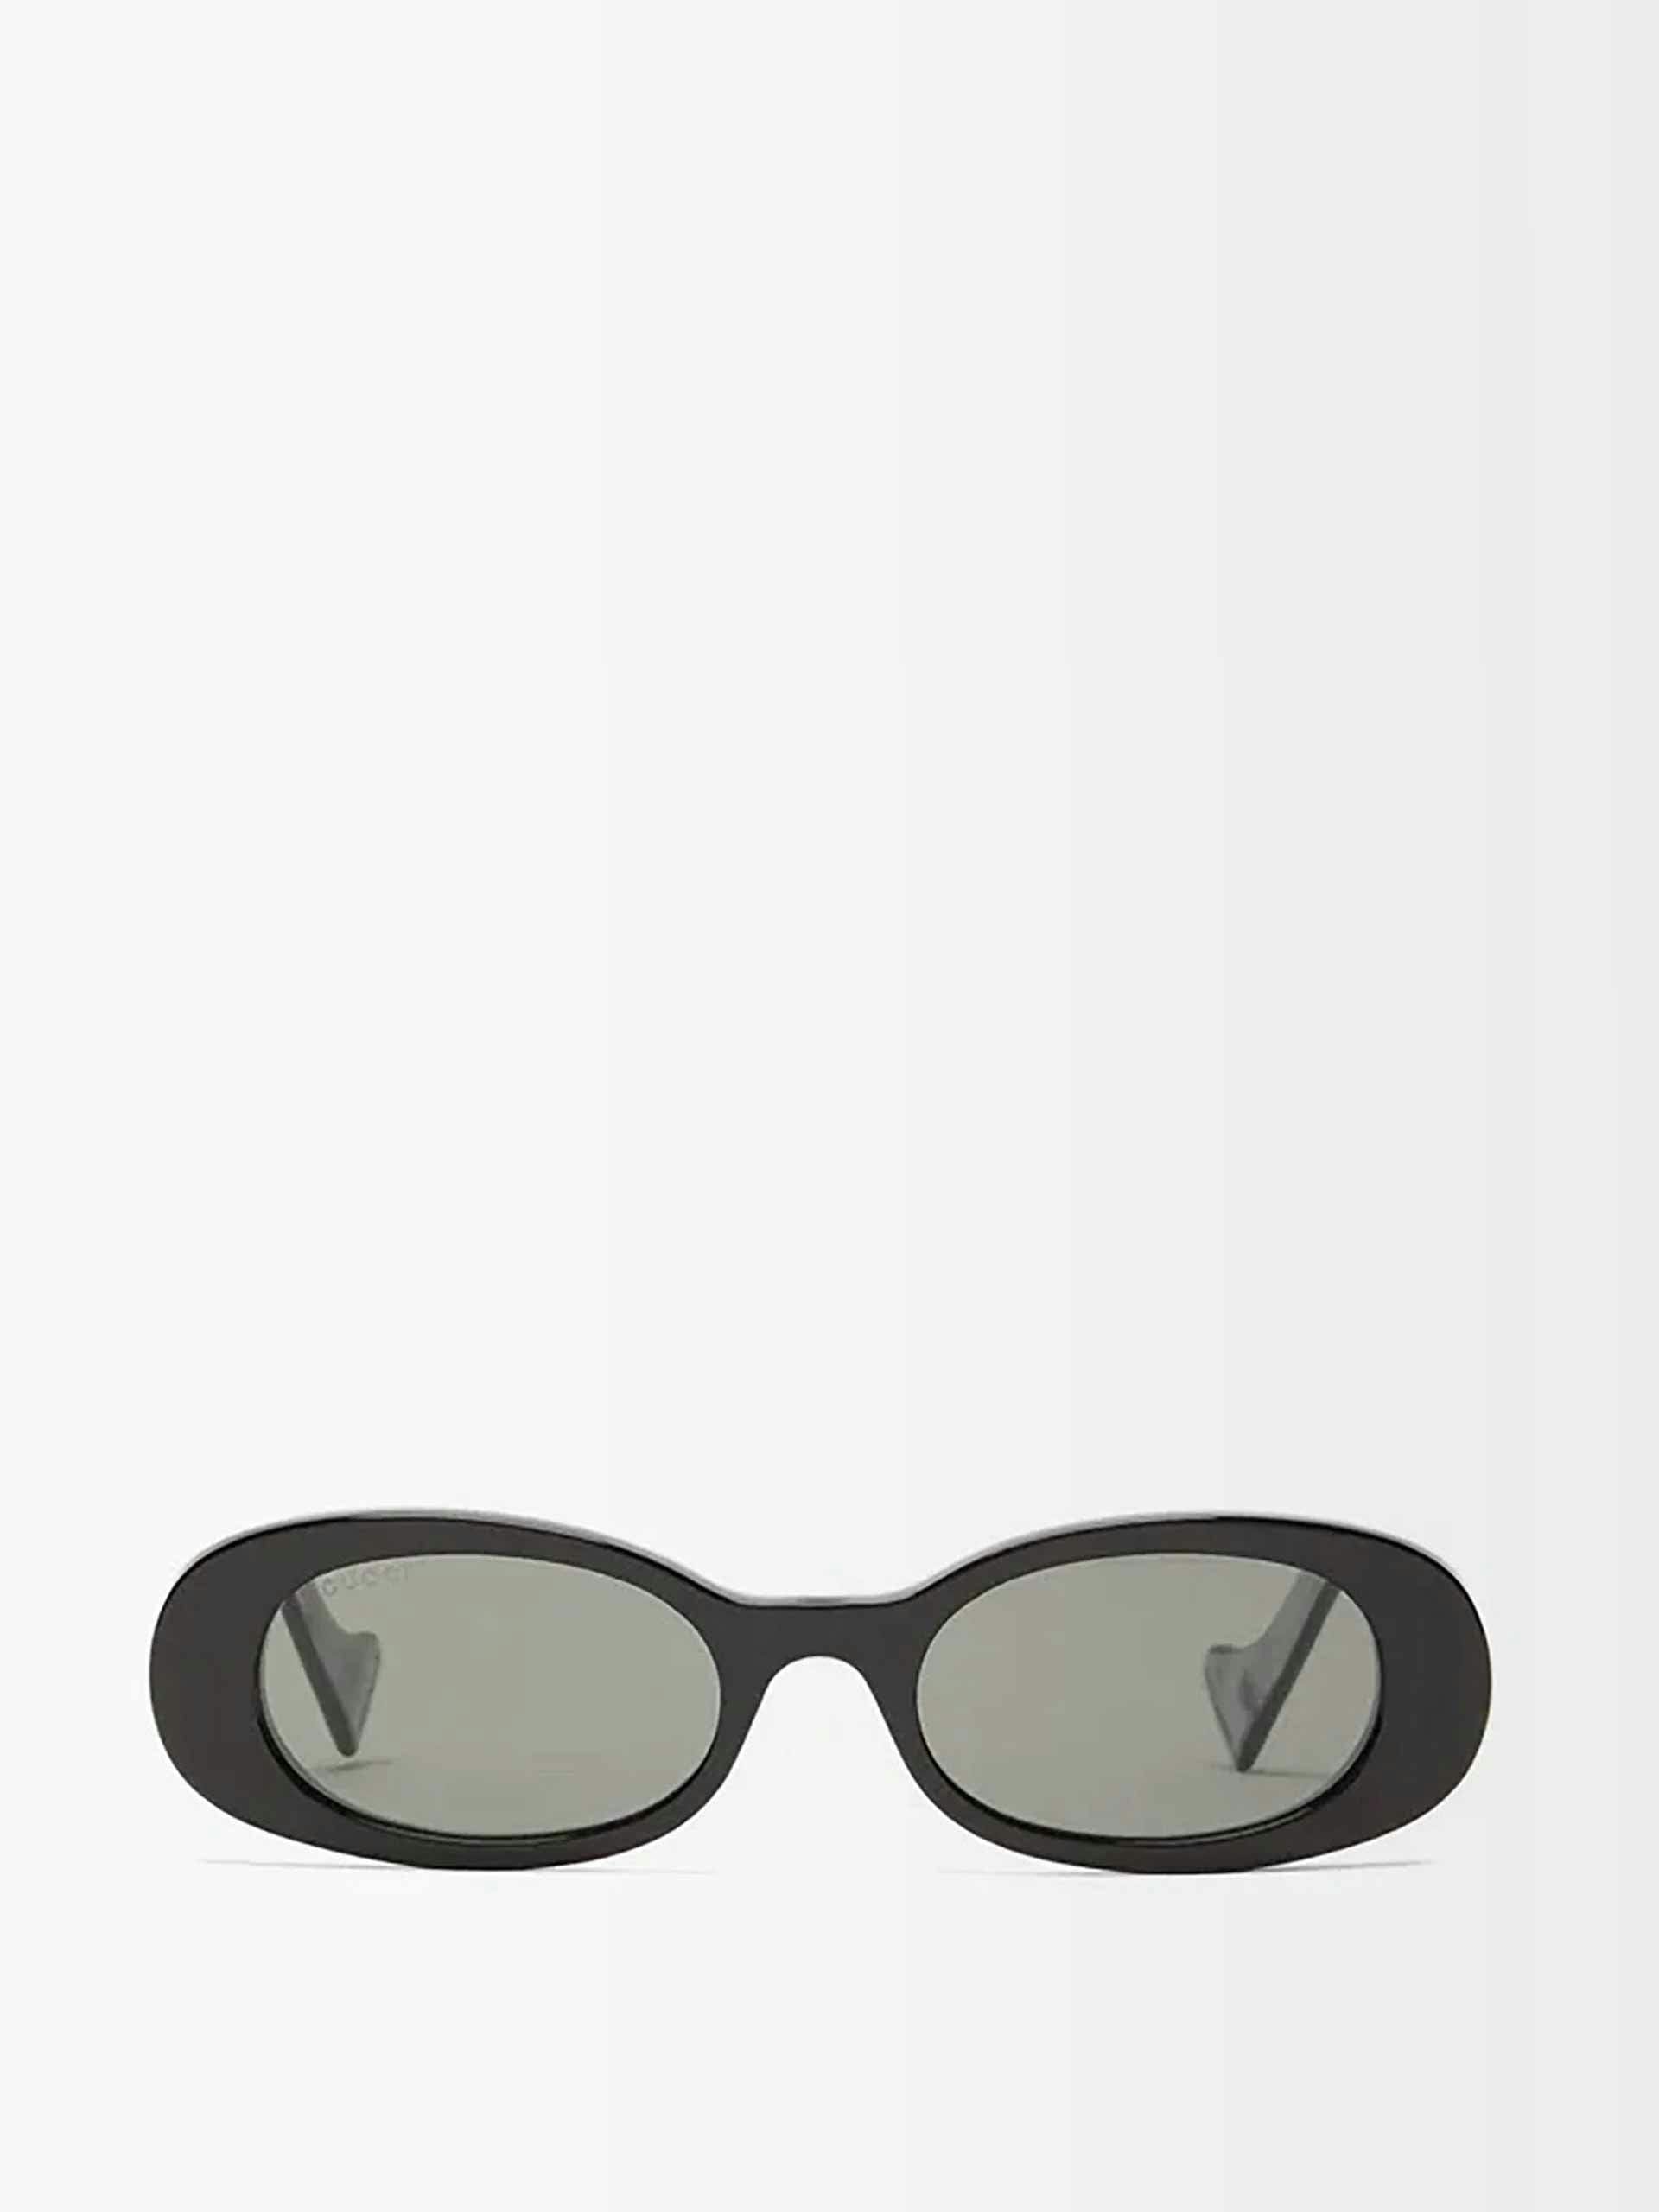 Oval acetate sunglasses